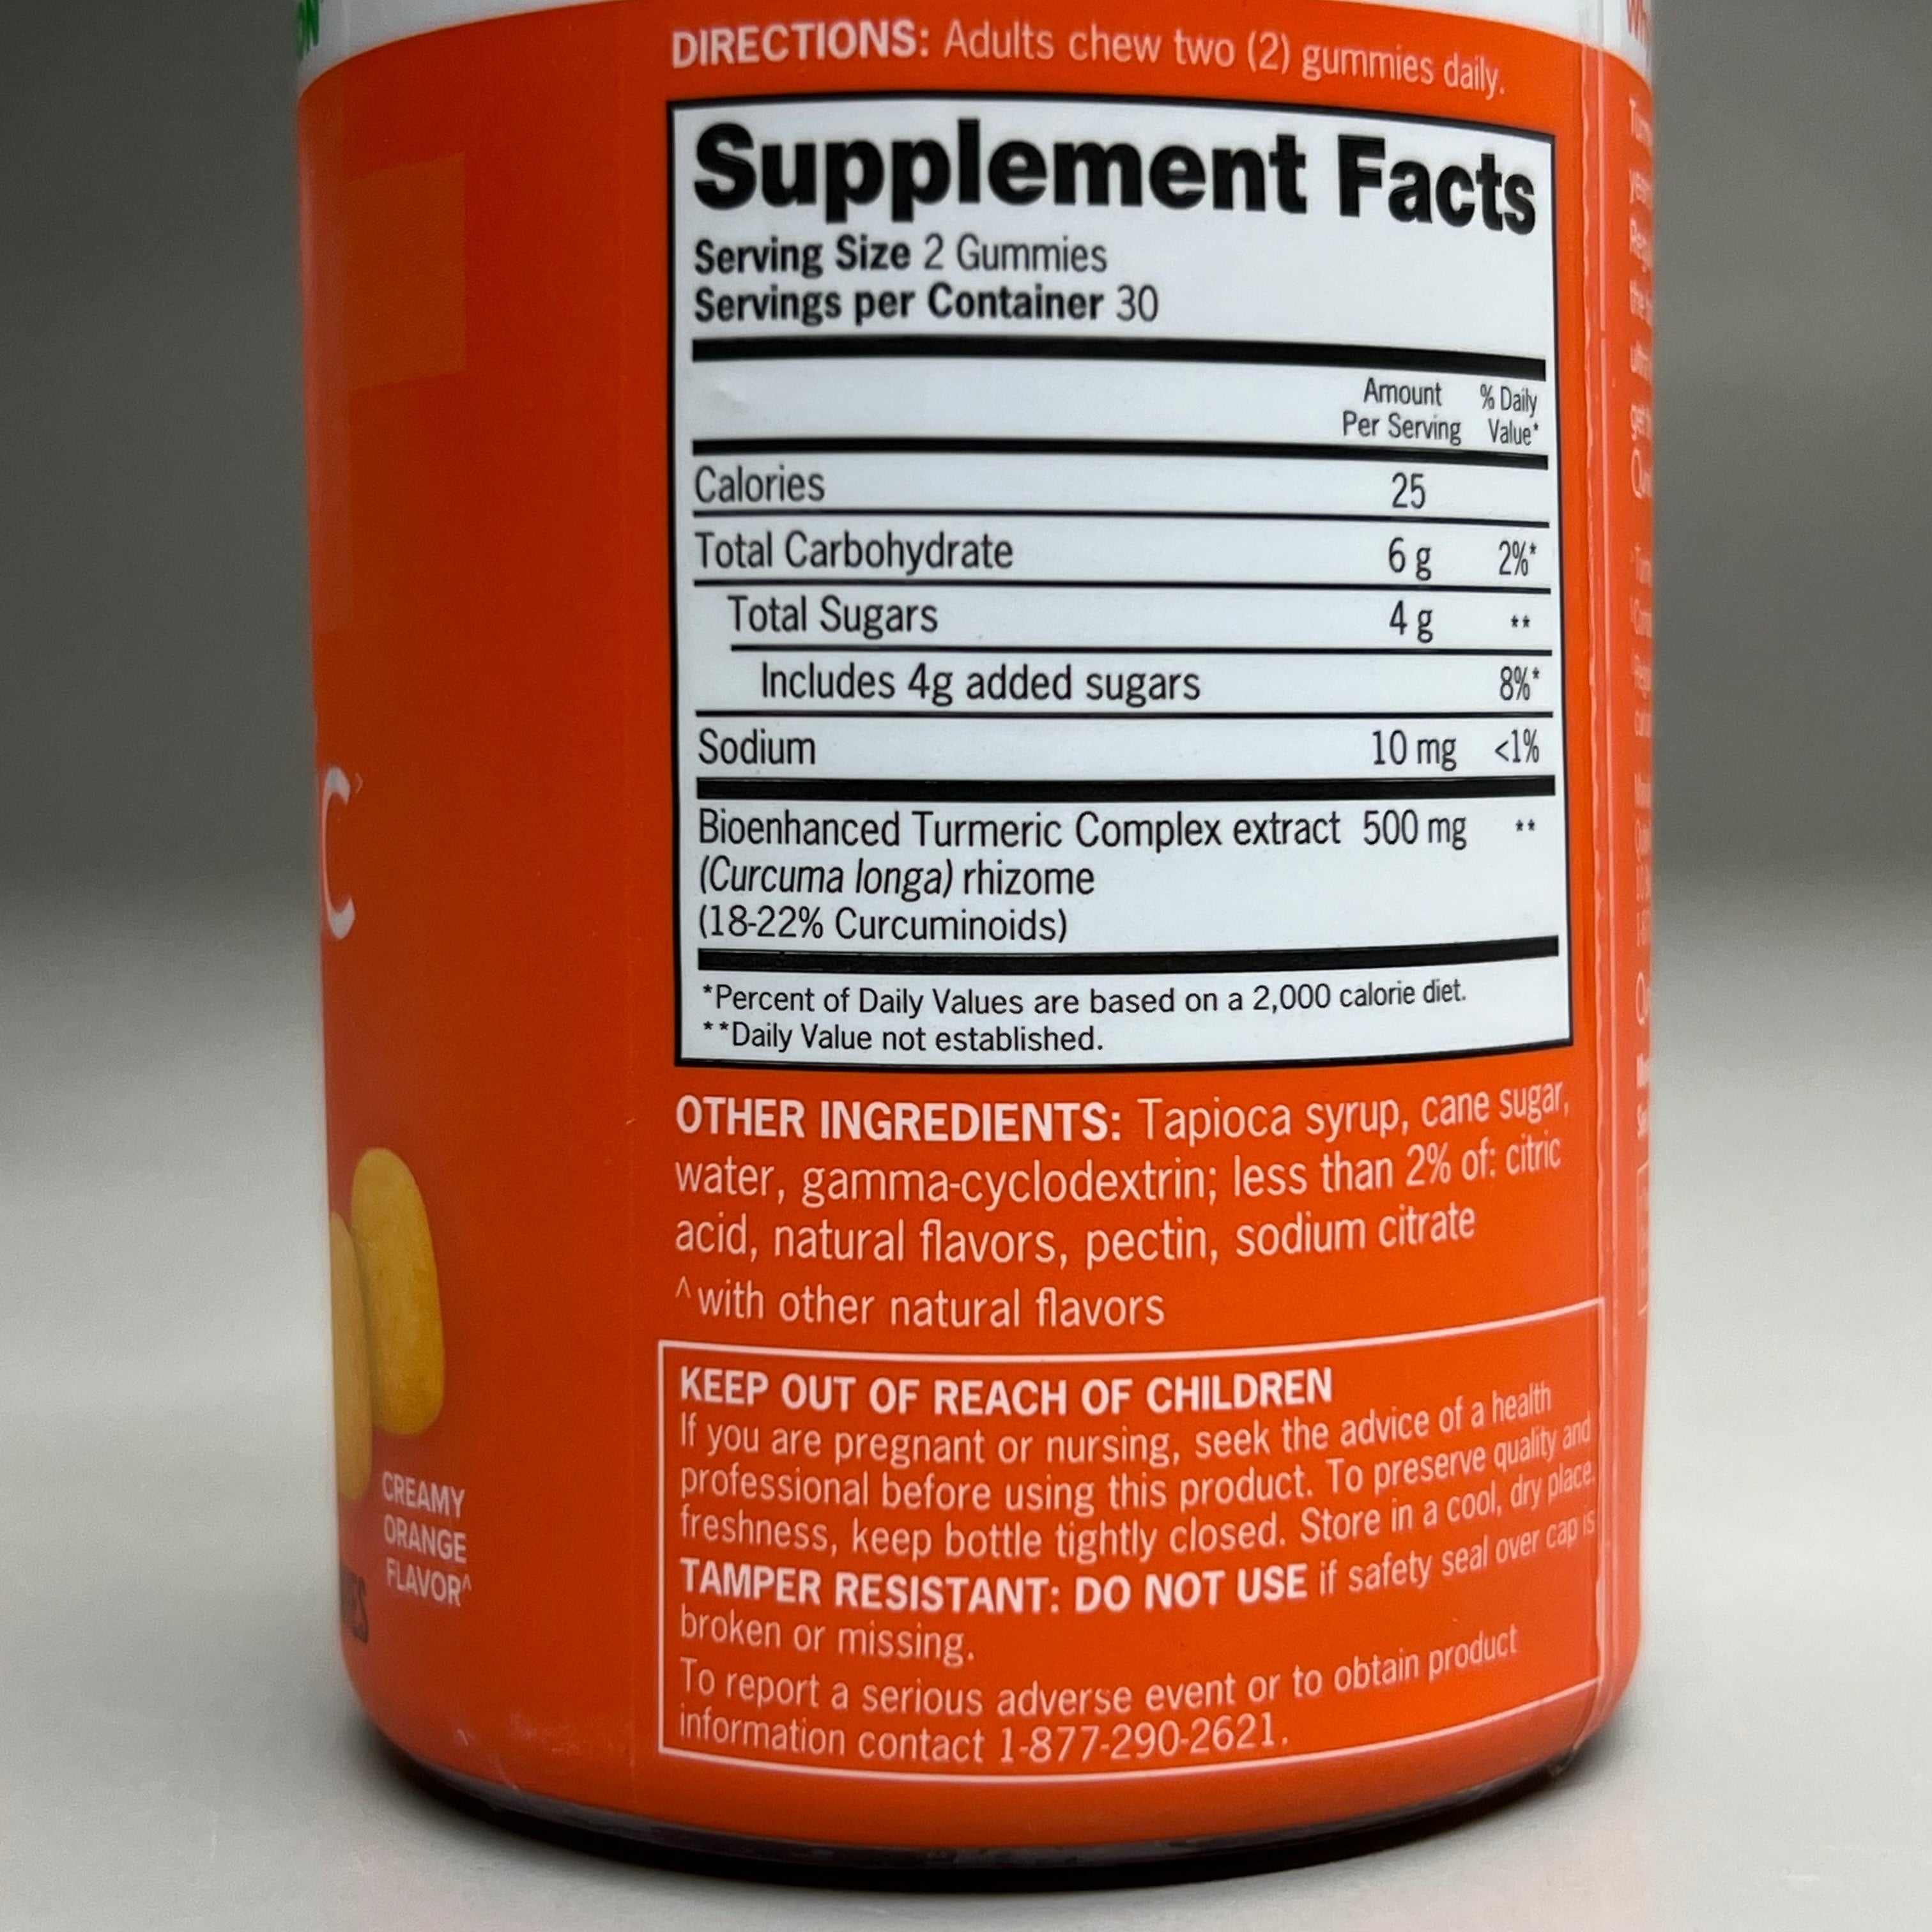 ZA@ QUNOL Turmeric Gummy Dietary Supplements 500 mg 36-PK! BB 05/25 A